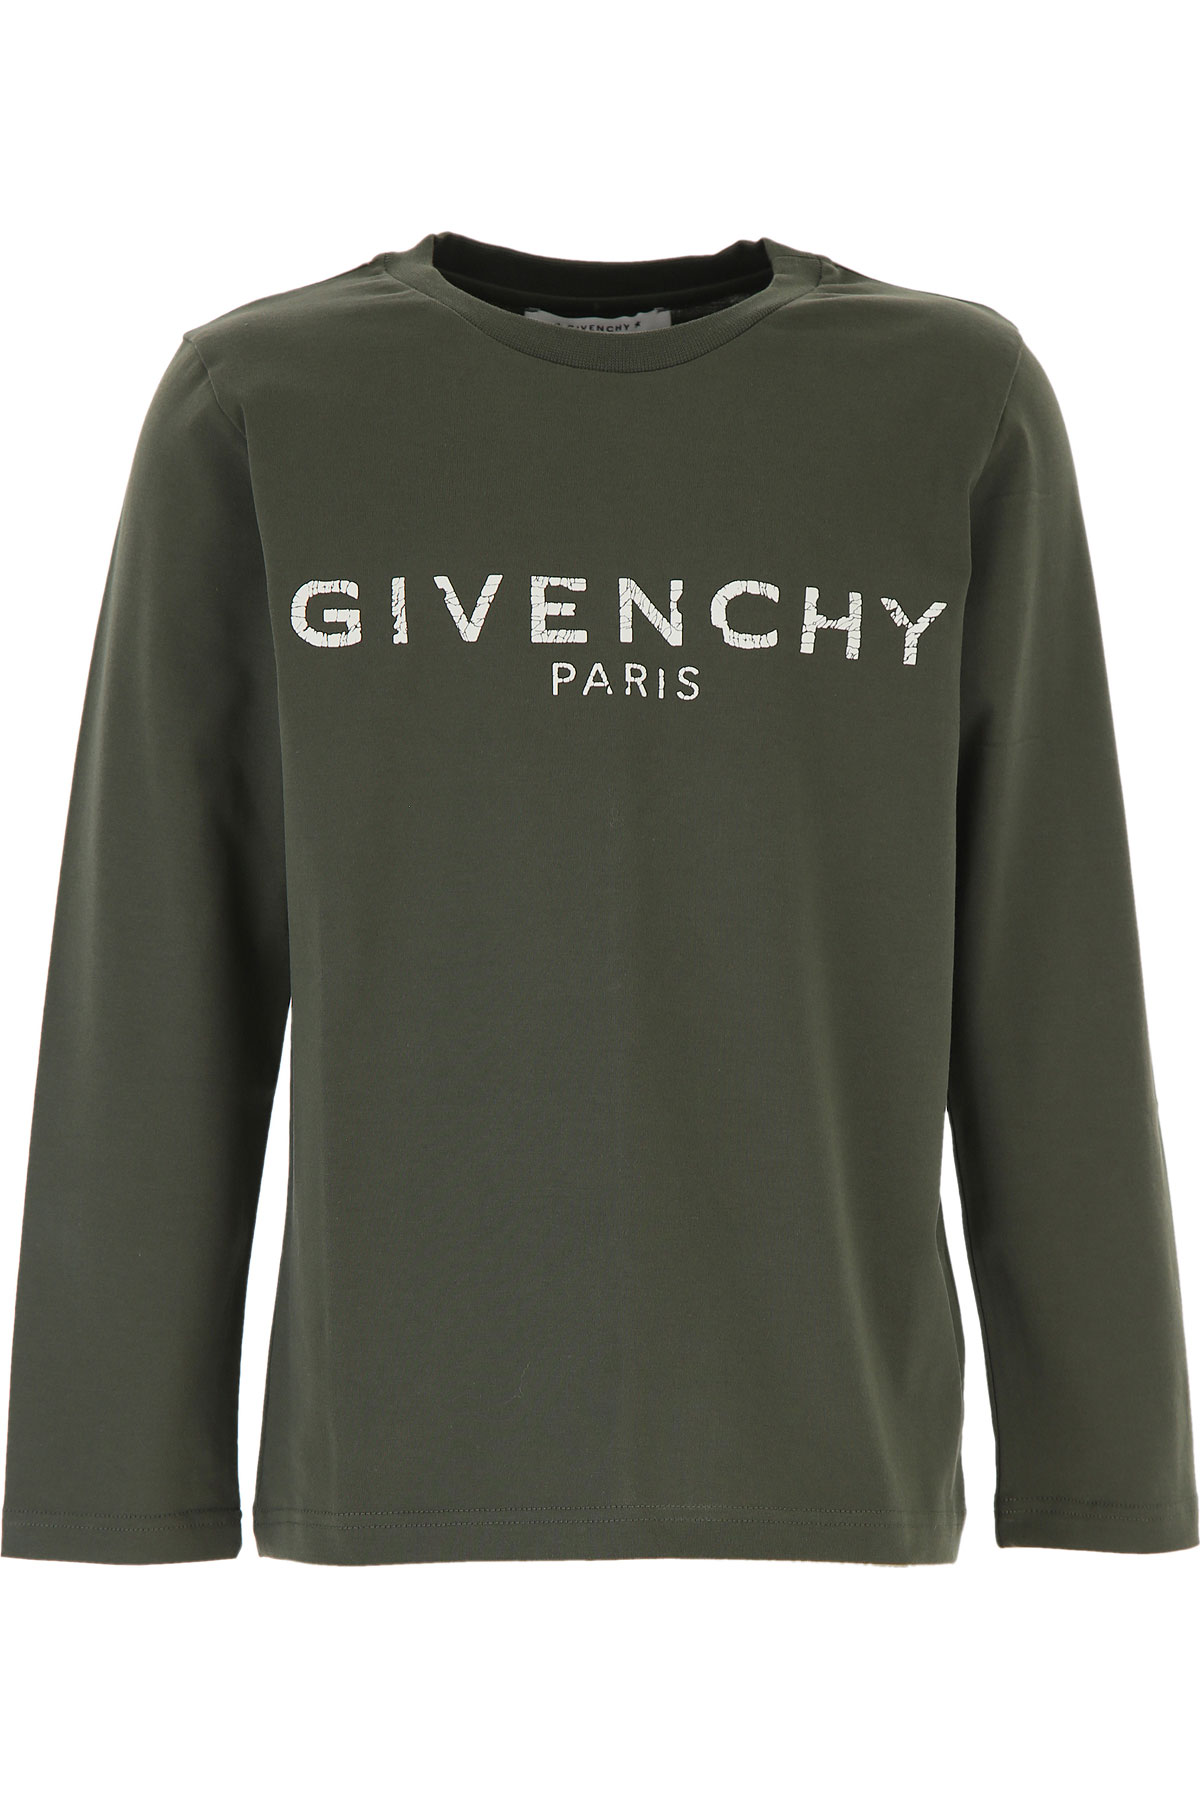 Givenchy Kinder T-Shirt für Jungen Günstig im Sale, Militär Grün, Baumwolle, 2017, 10Y 12Y 4Y 6Y 8Y